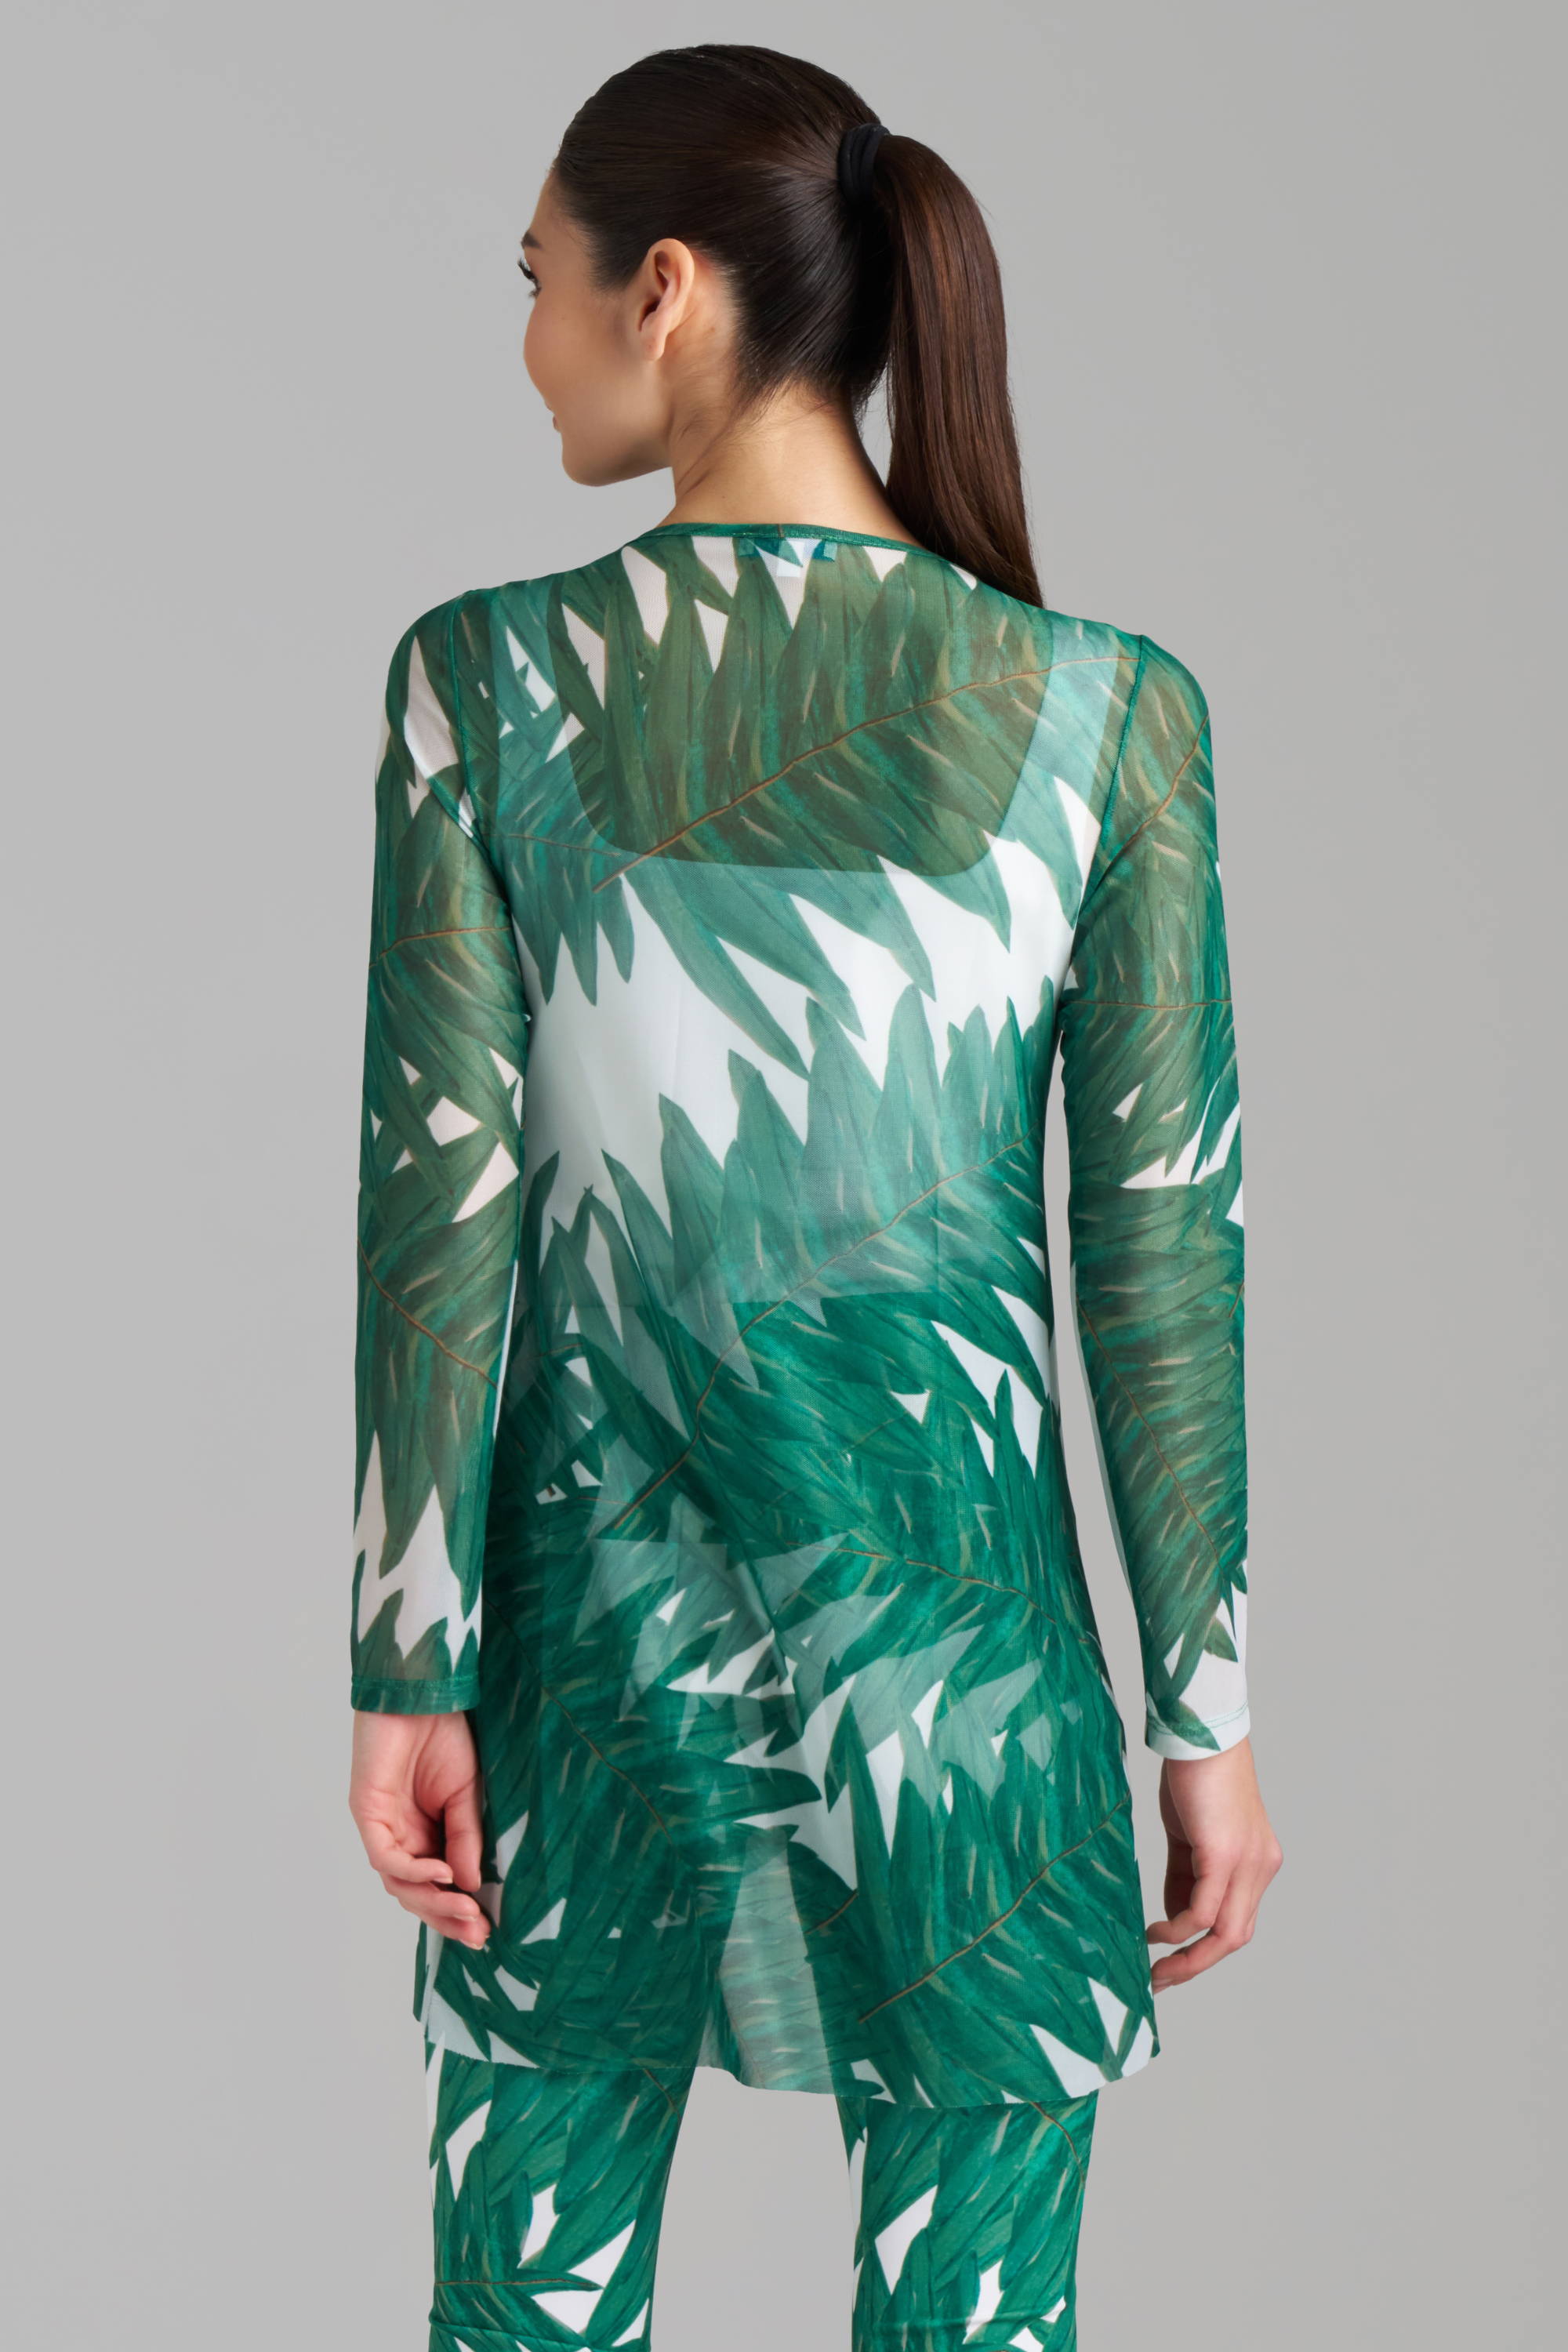 Woman wearing green palm printed mesh tunic by Ala von Auersperg